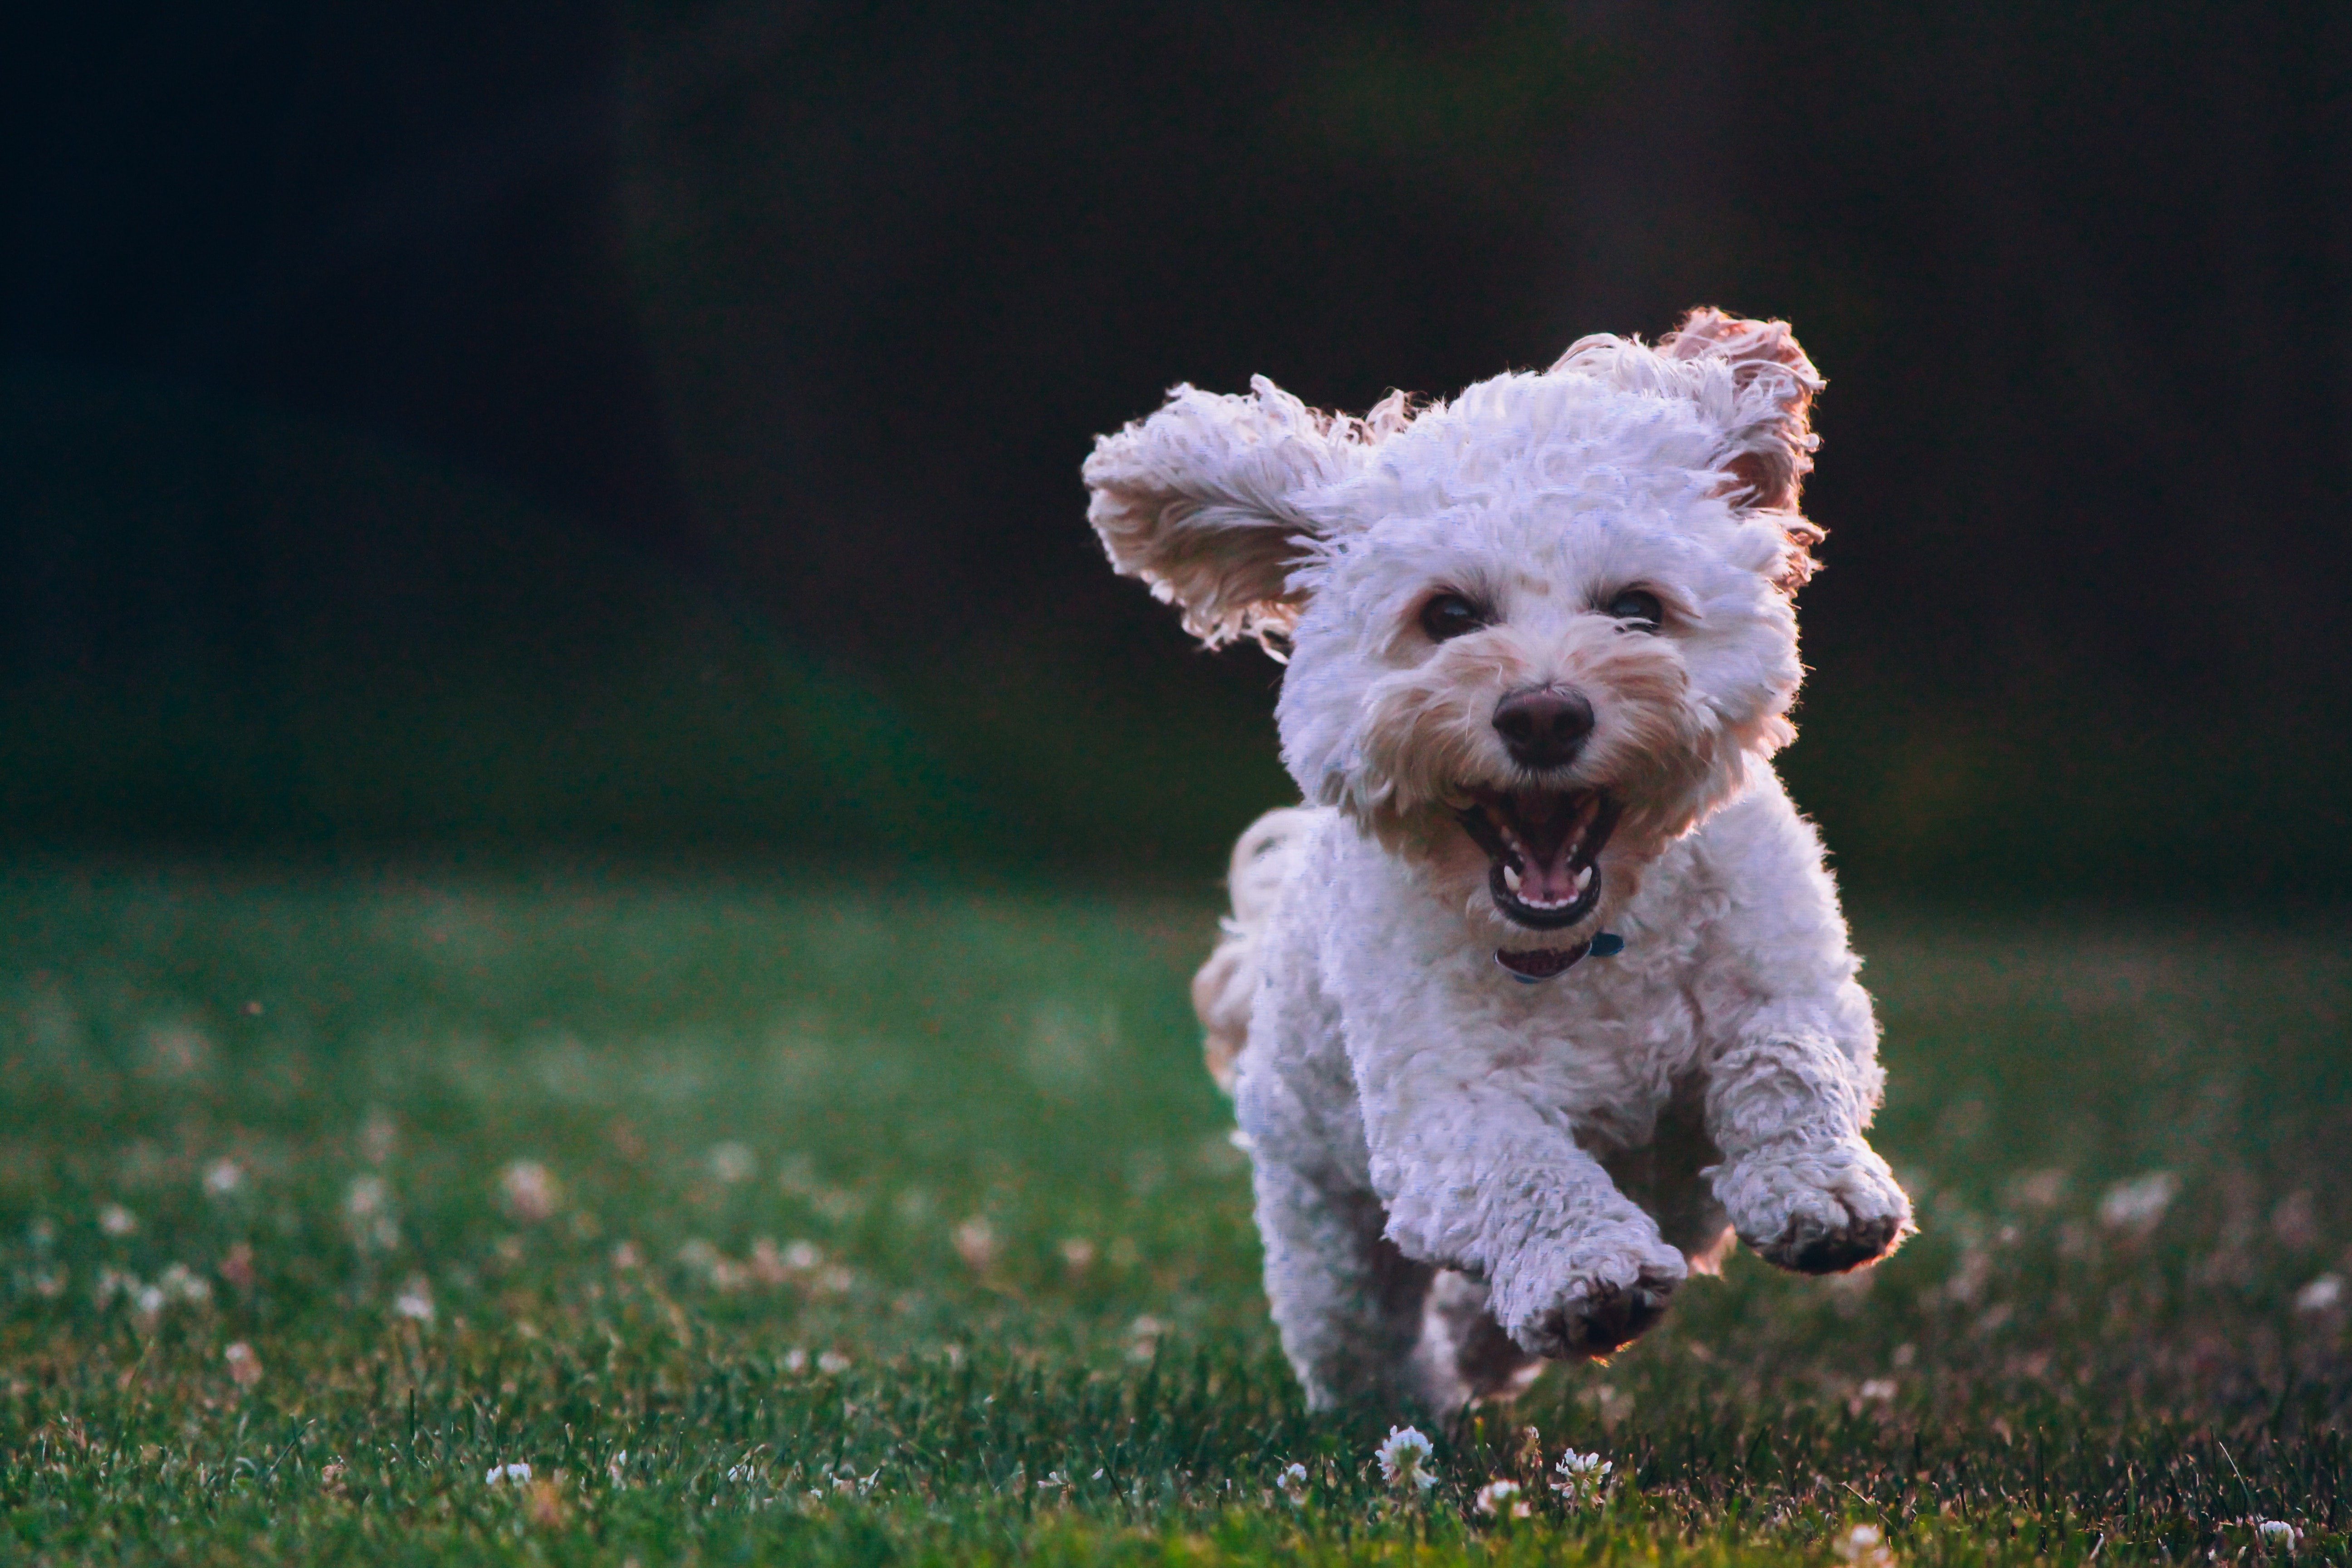 Puppy running happily